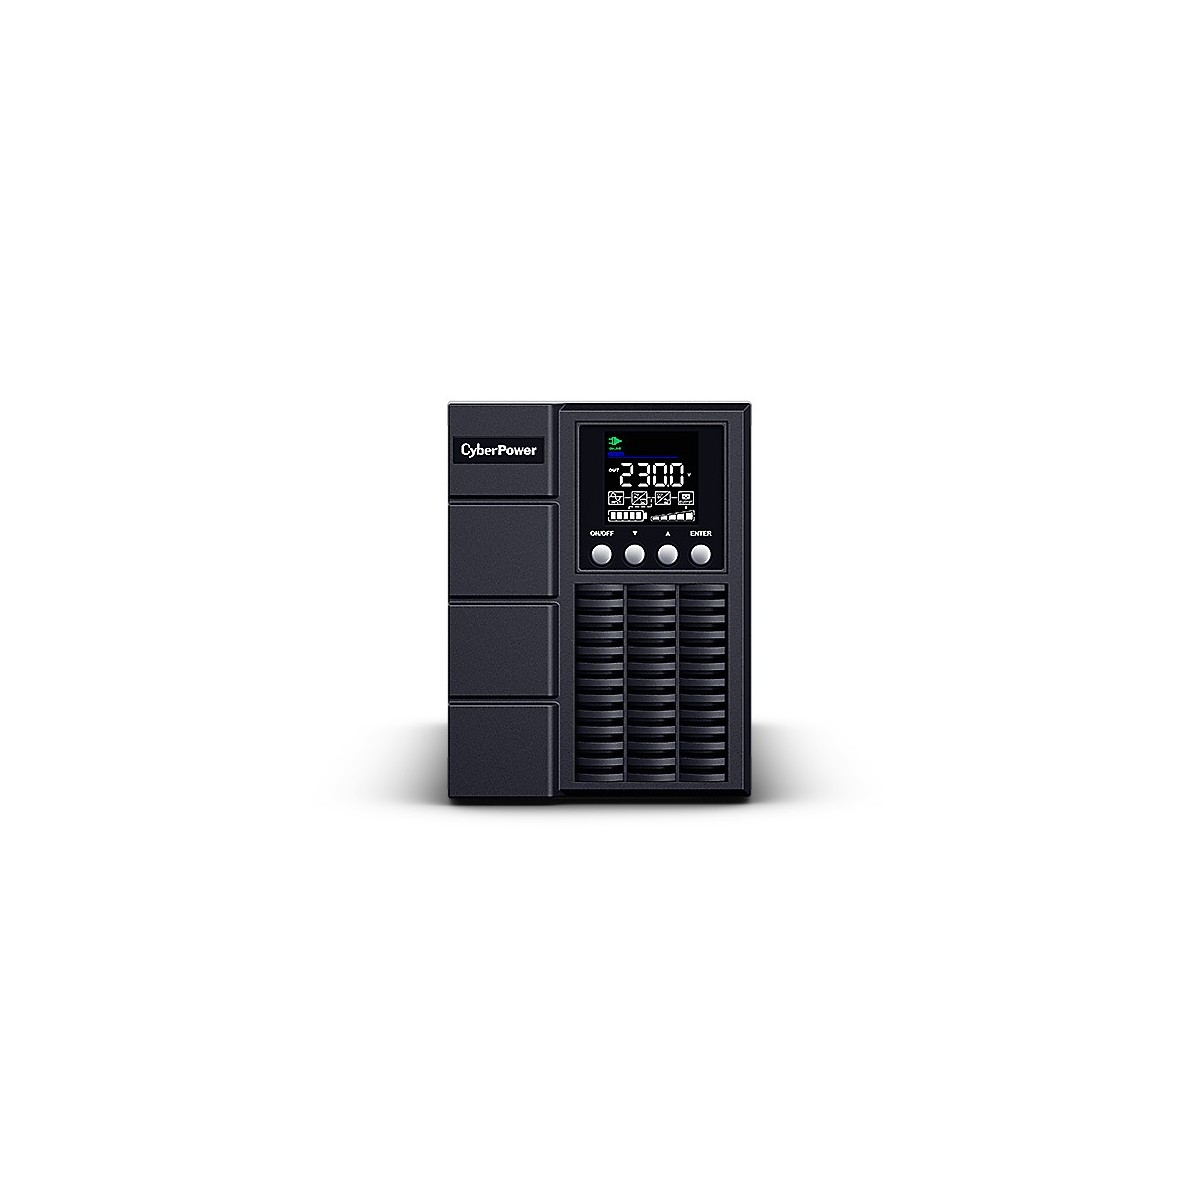 CyberPower Systems CyberPower USV OLS1000EA-DE Tower 1000VA/900W - (Offline) UPS - Power Saving Mode